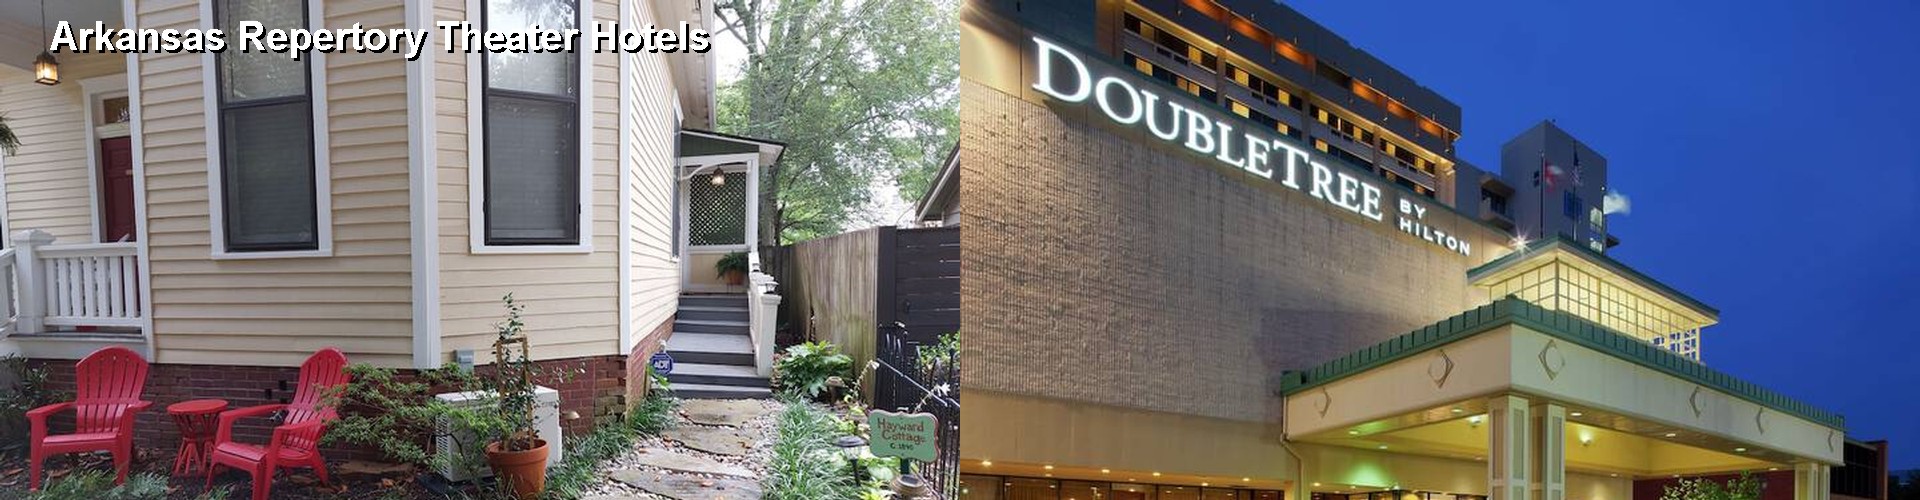 5 Best Hotels near Arkansas Repertory Theater